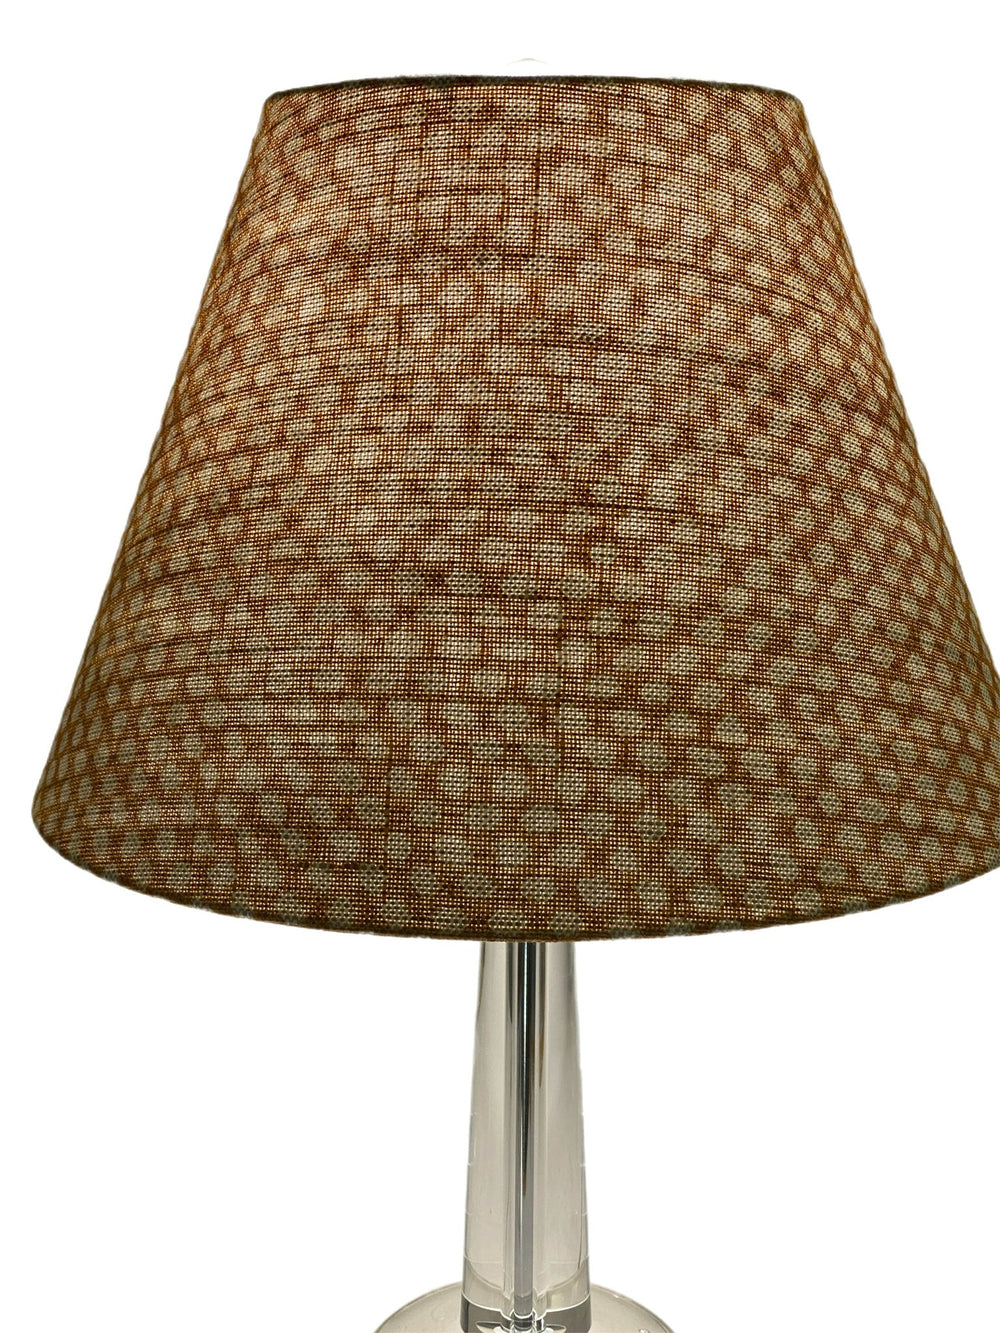 Custom Hardback Empire Shades Made using Fermoie Fabric - 16" and 18" base - Lux Lamp Shades